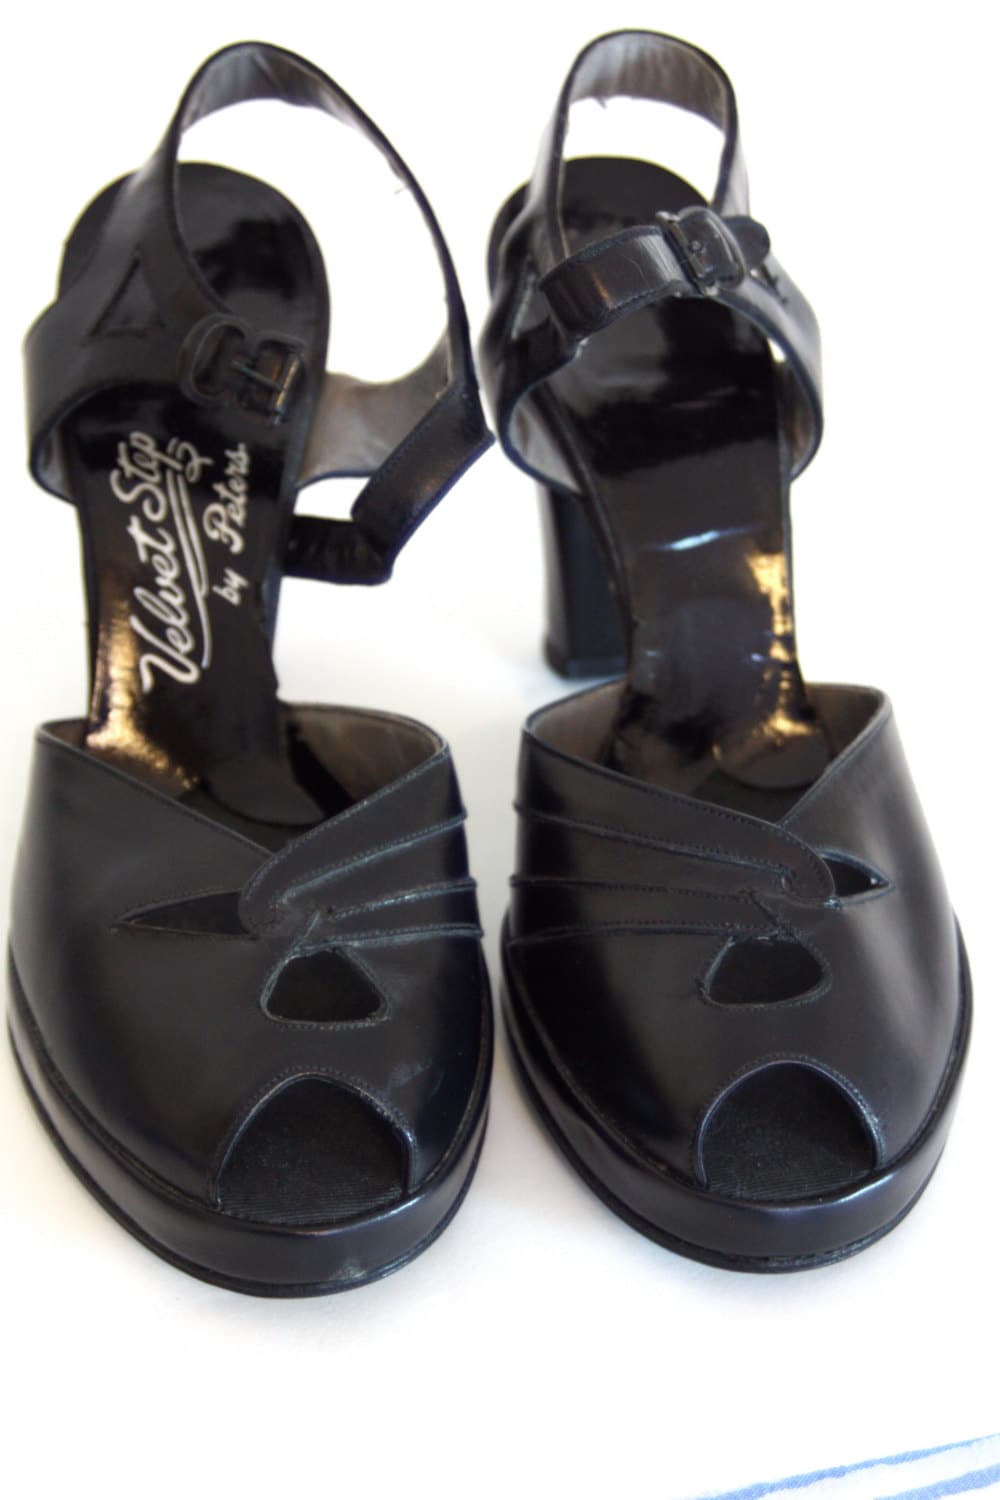 40s Platform Heels 1940s High Heel Pumps Black Leather Ankle Strap Boogie Woogie Dance Shoes 40s